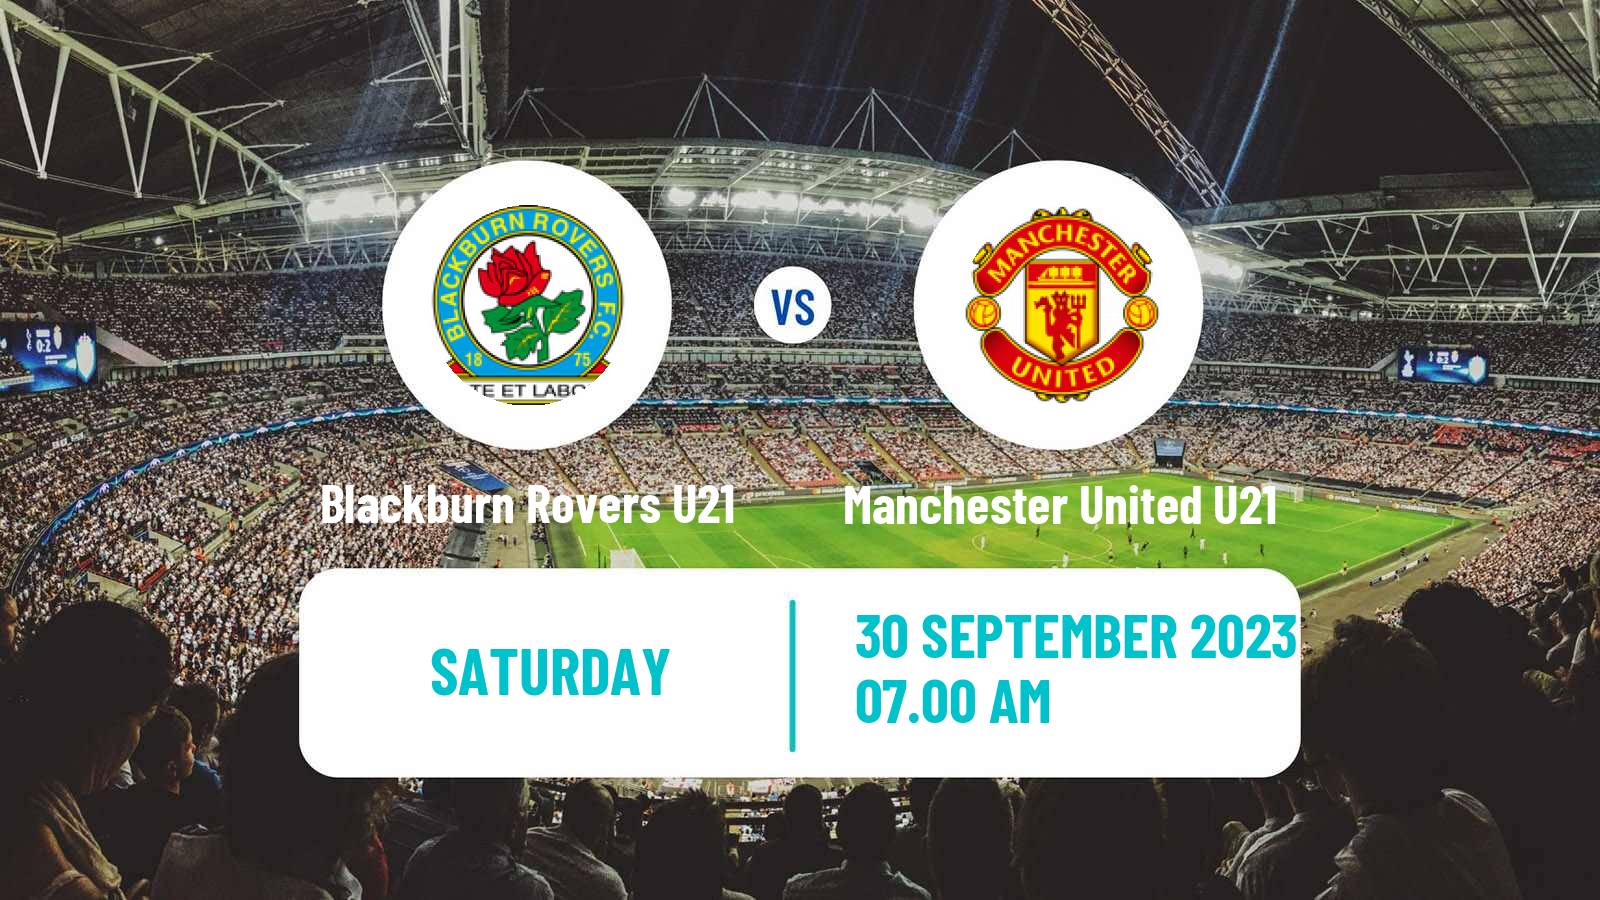 Soccer English Premier League 2 Blackburn Rovers U21 - Manchester United U21